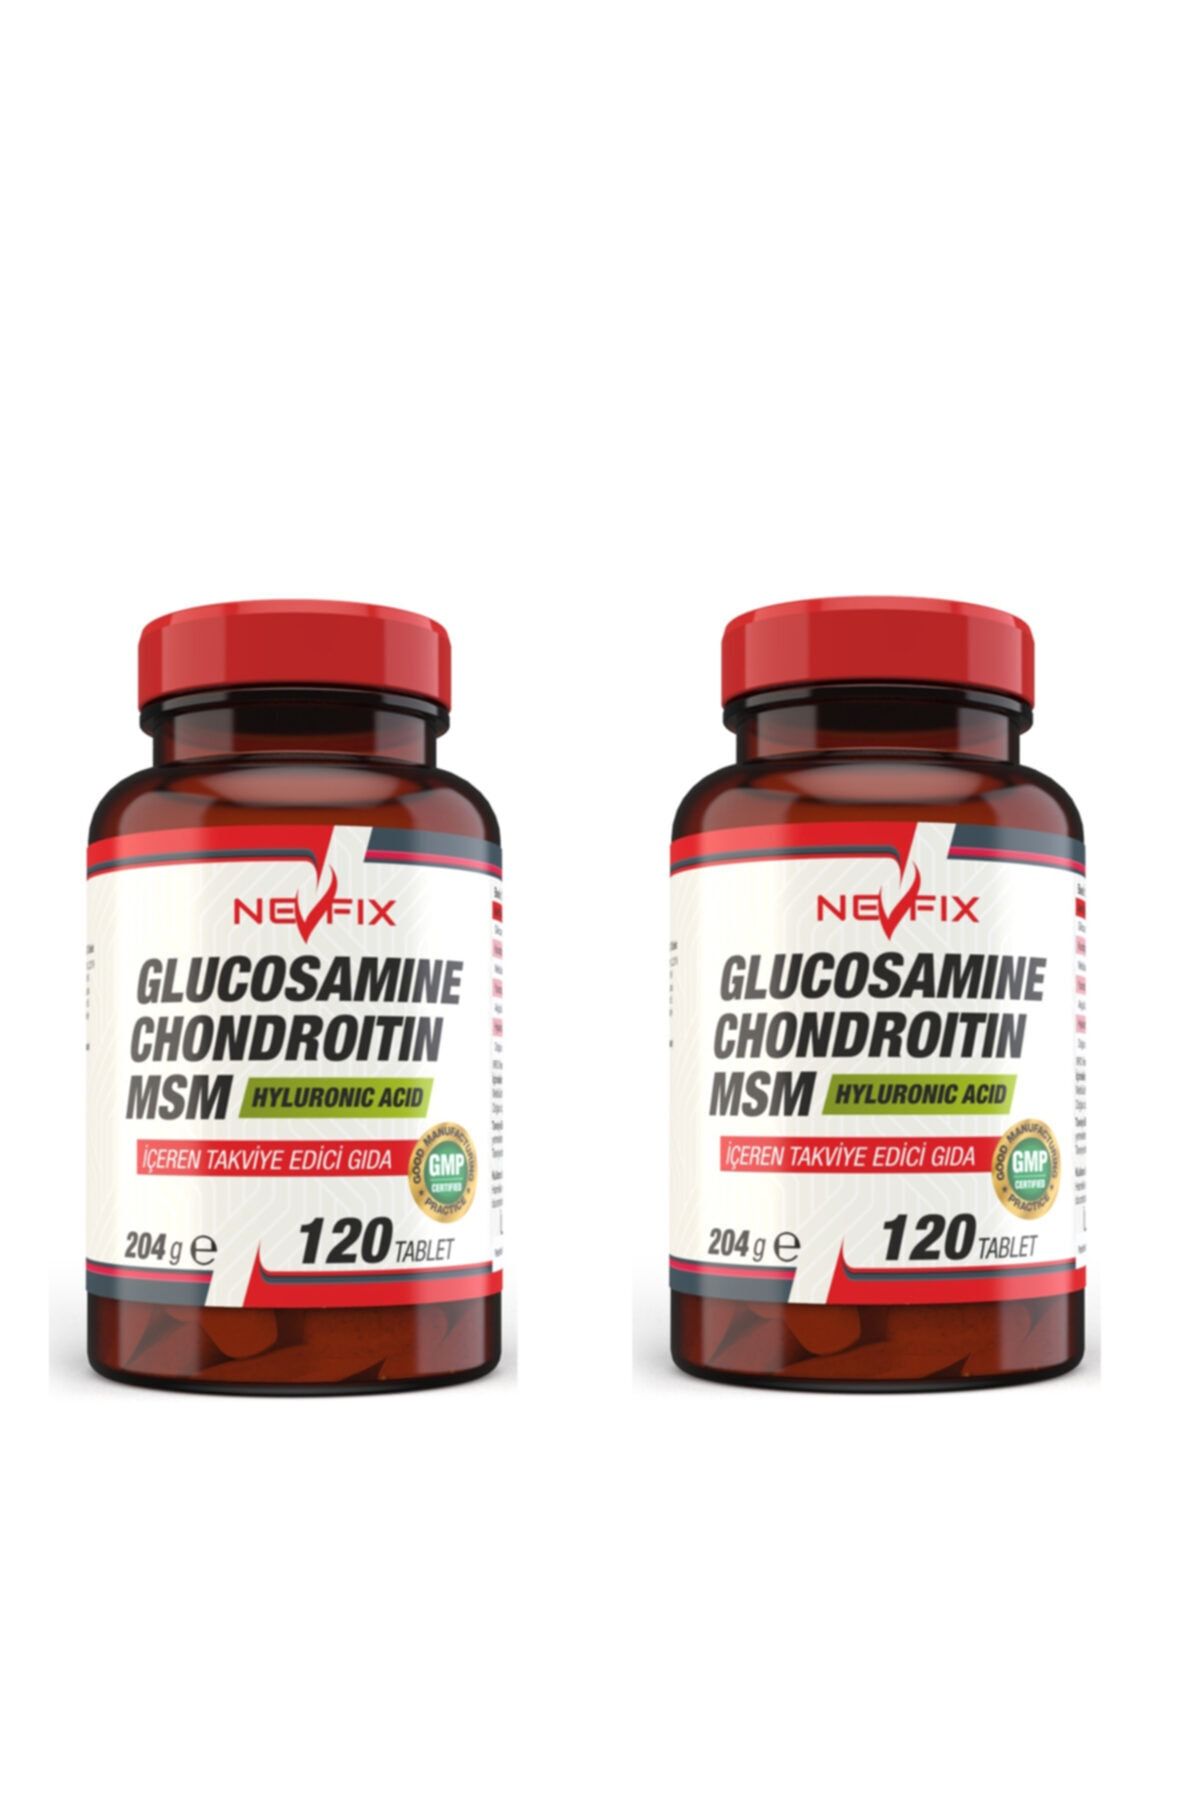 Nevfix Glucosamine Chondroitin Msm 120 Tablet x 2 Kutu 240 Tablet